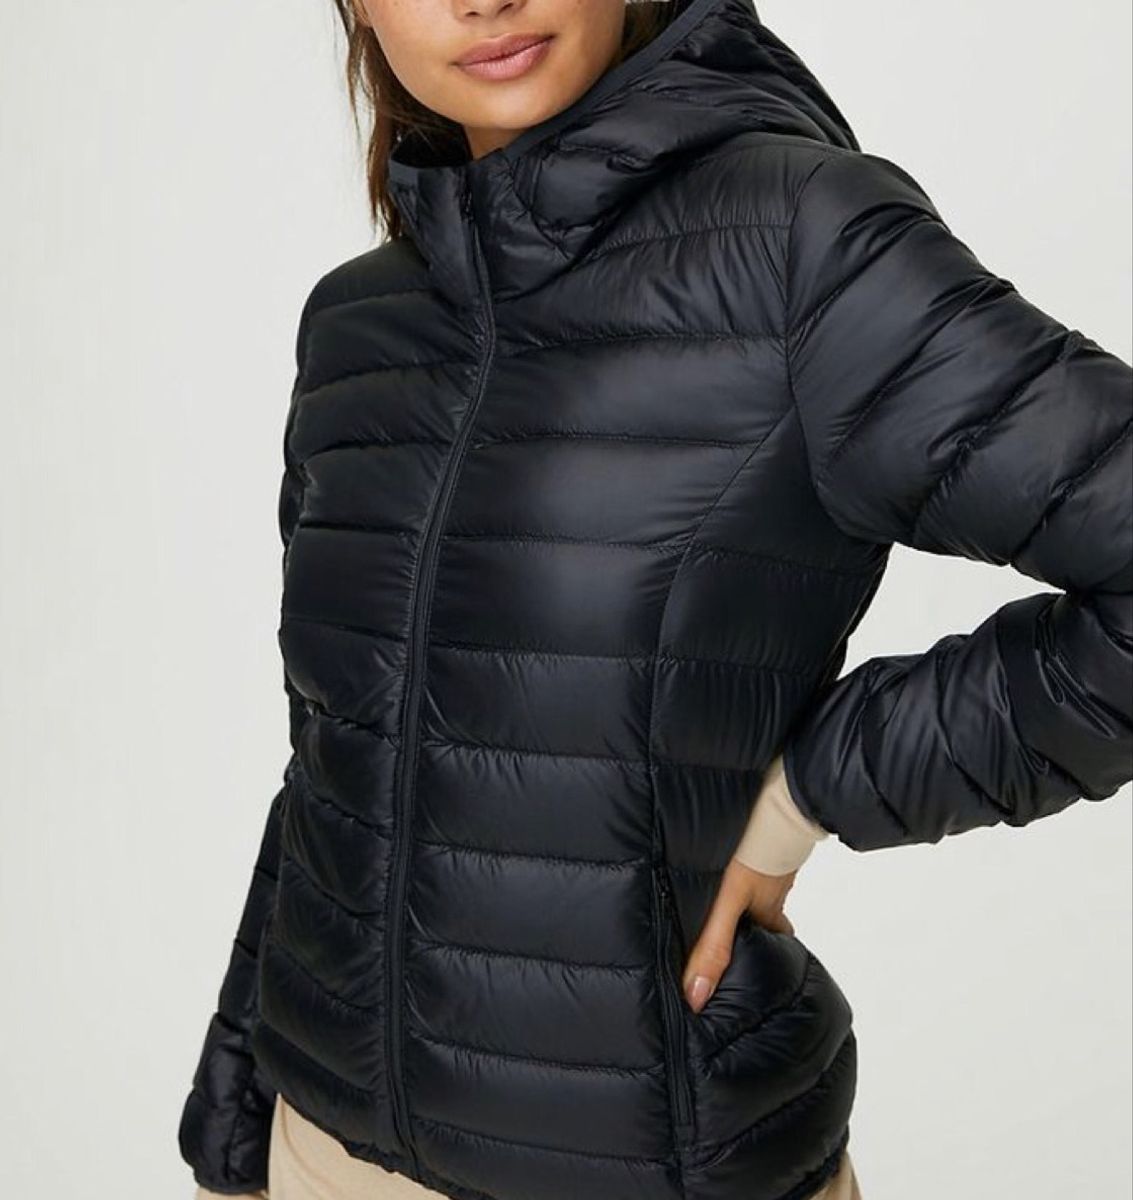 jaqueta nylon impermeavel feminina